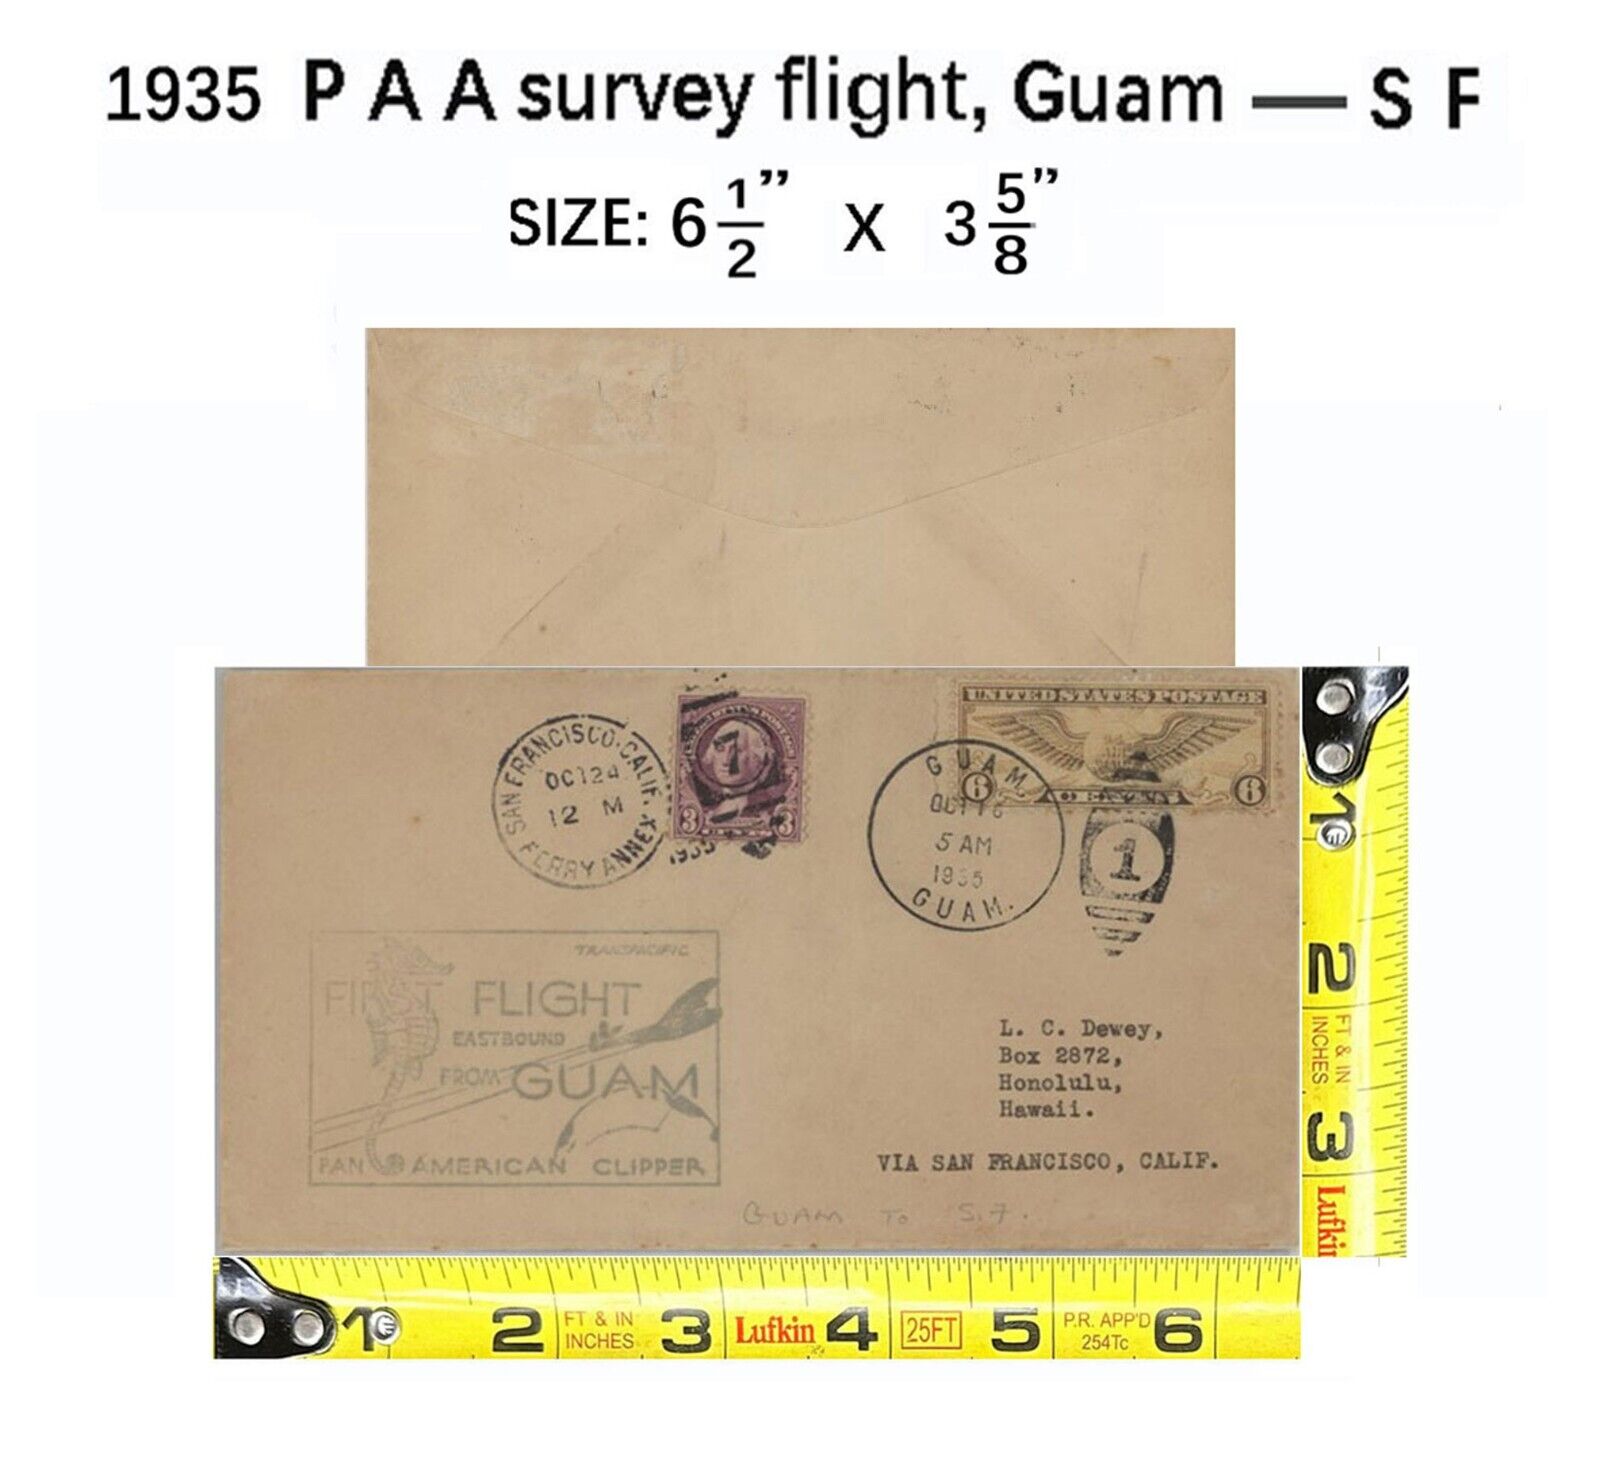 1935 Pan American Airways survey flight,Guam to San Francisco.